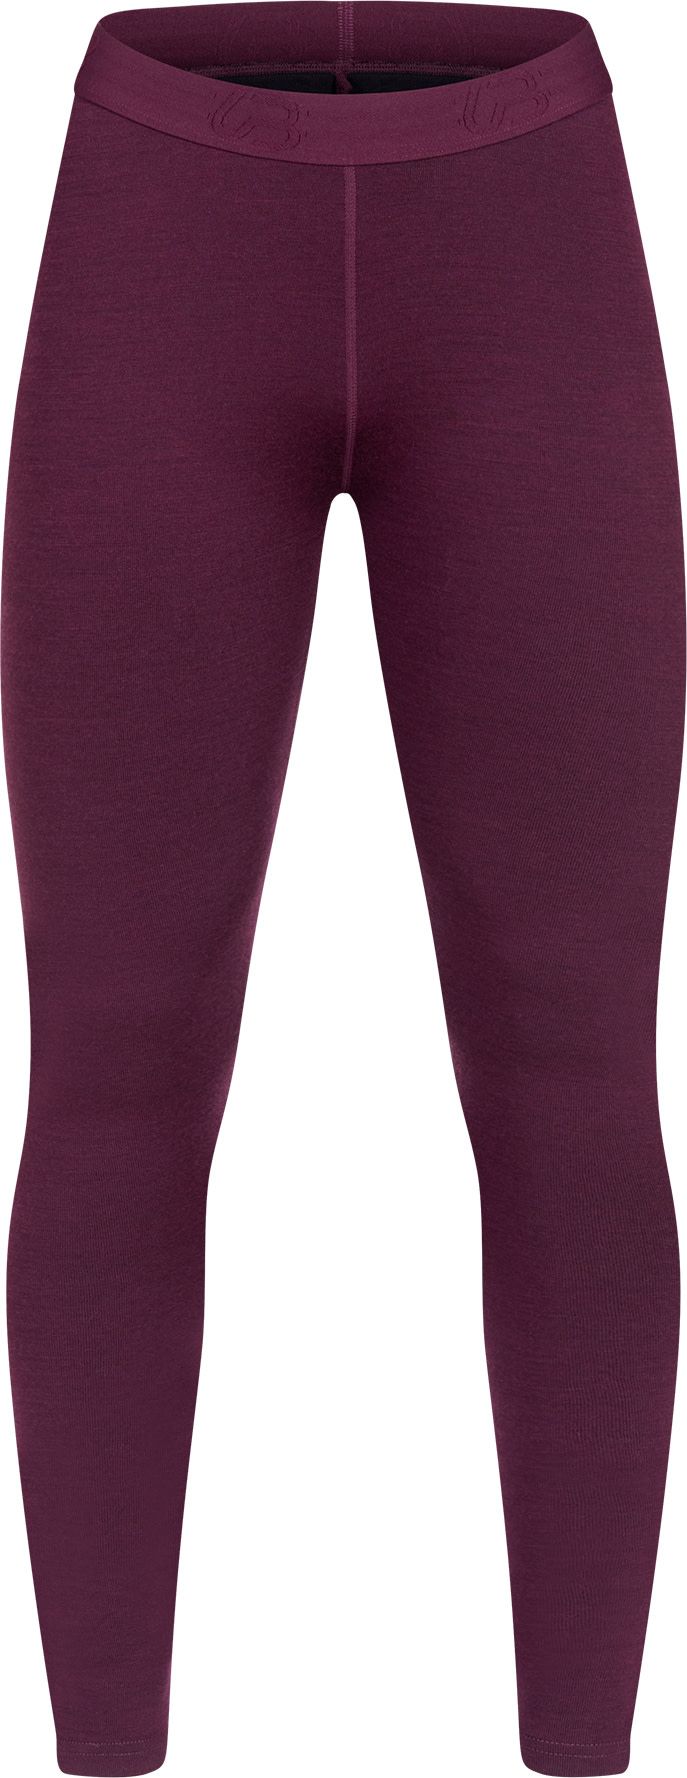 Women's Selje Merino-Bamboo Pants Potent Purple